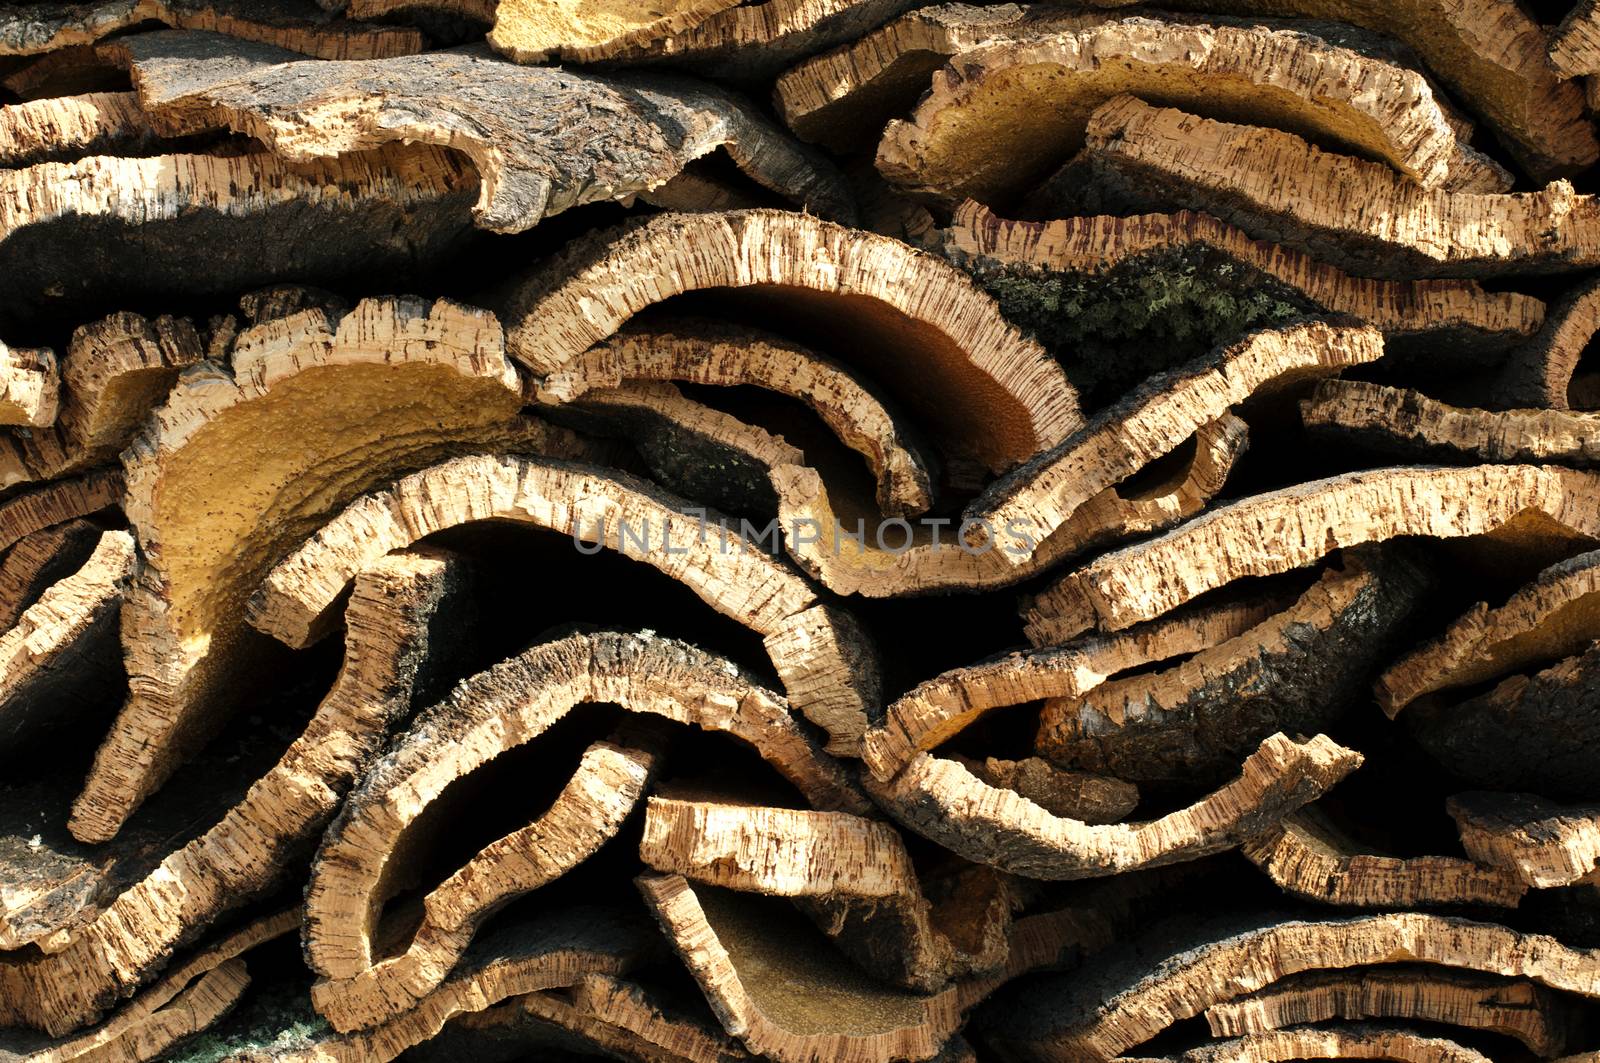 Cork crust. Natural piece of wood